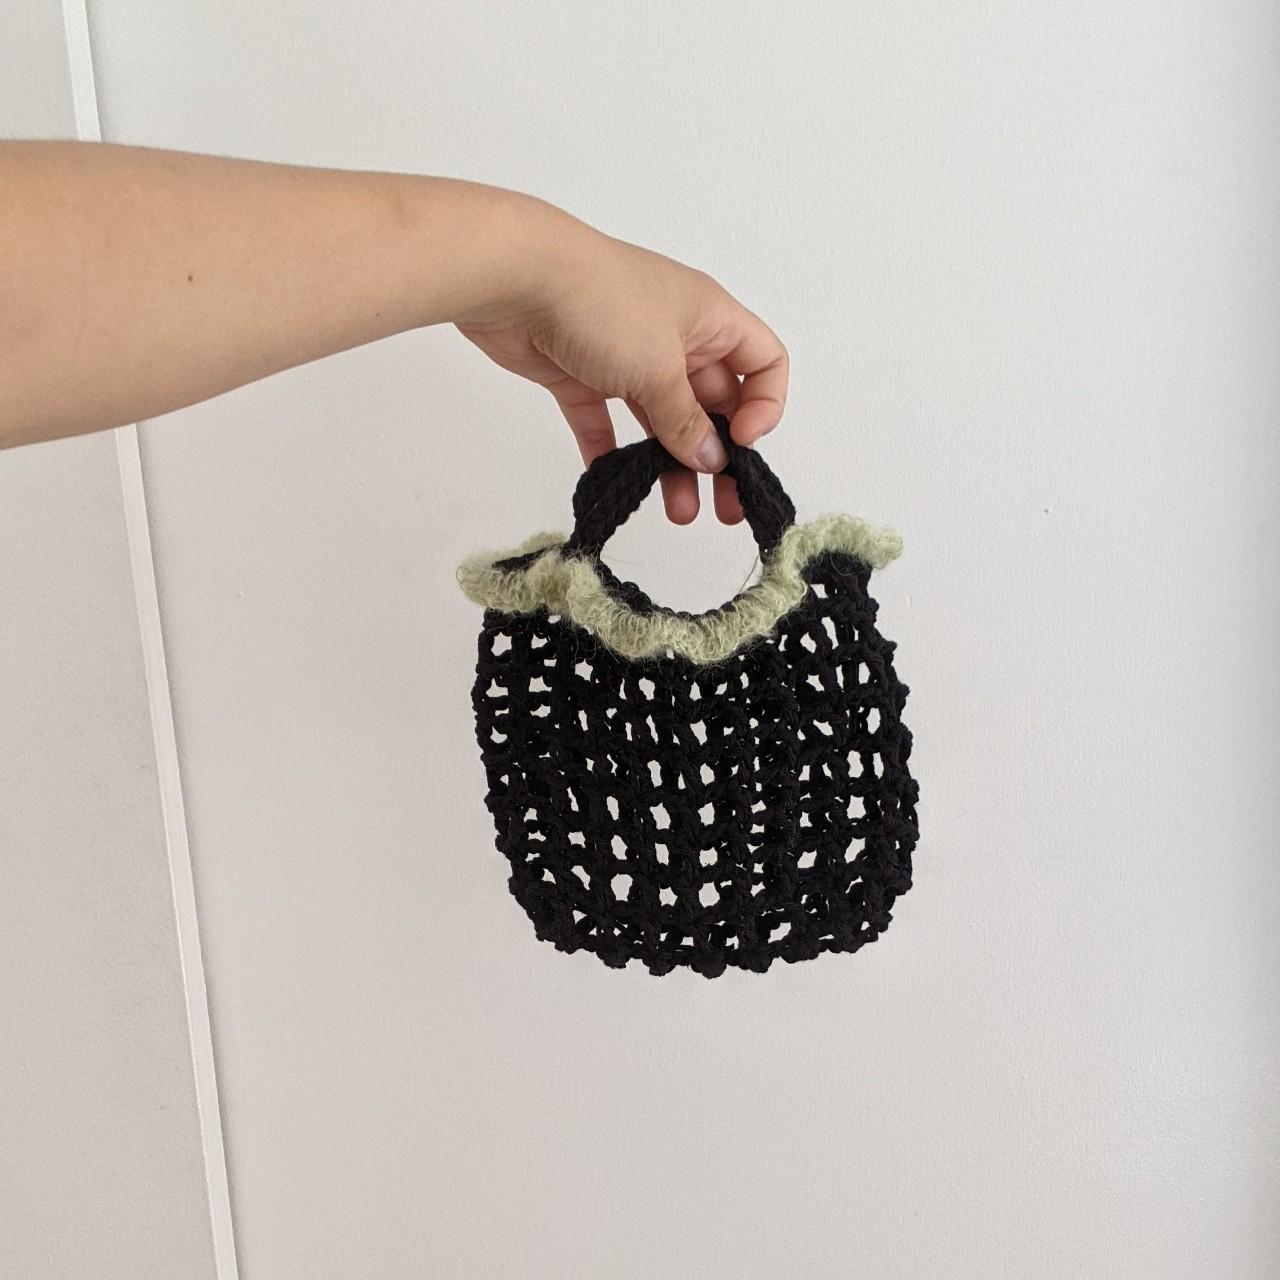 Long handled crochet mesh bag 